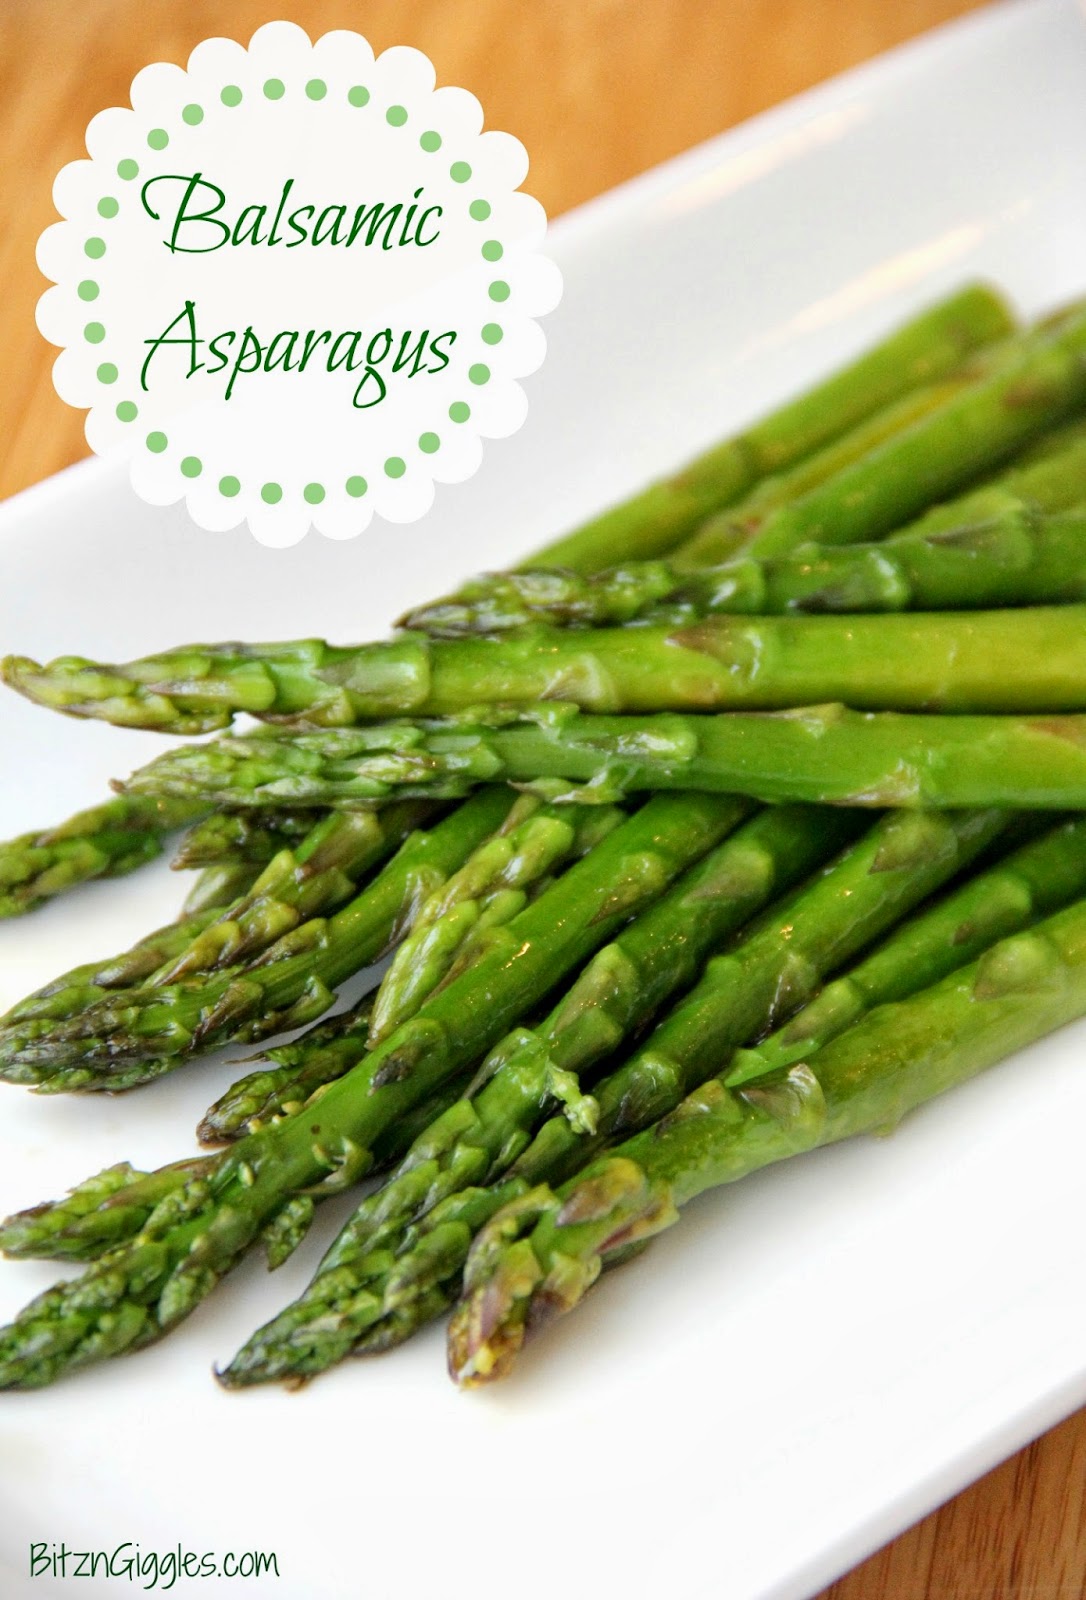 https://www.bitzngiggles.com/2014/03/balsamic-asparagus.html